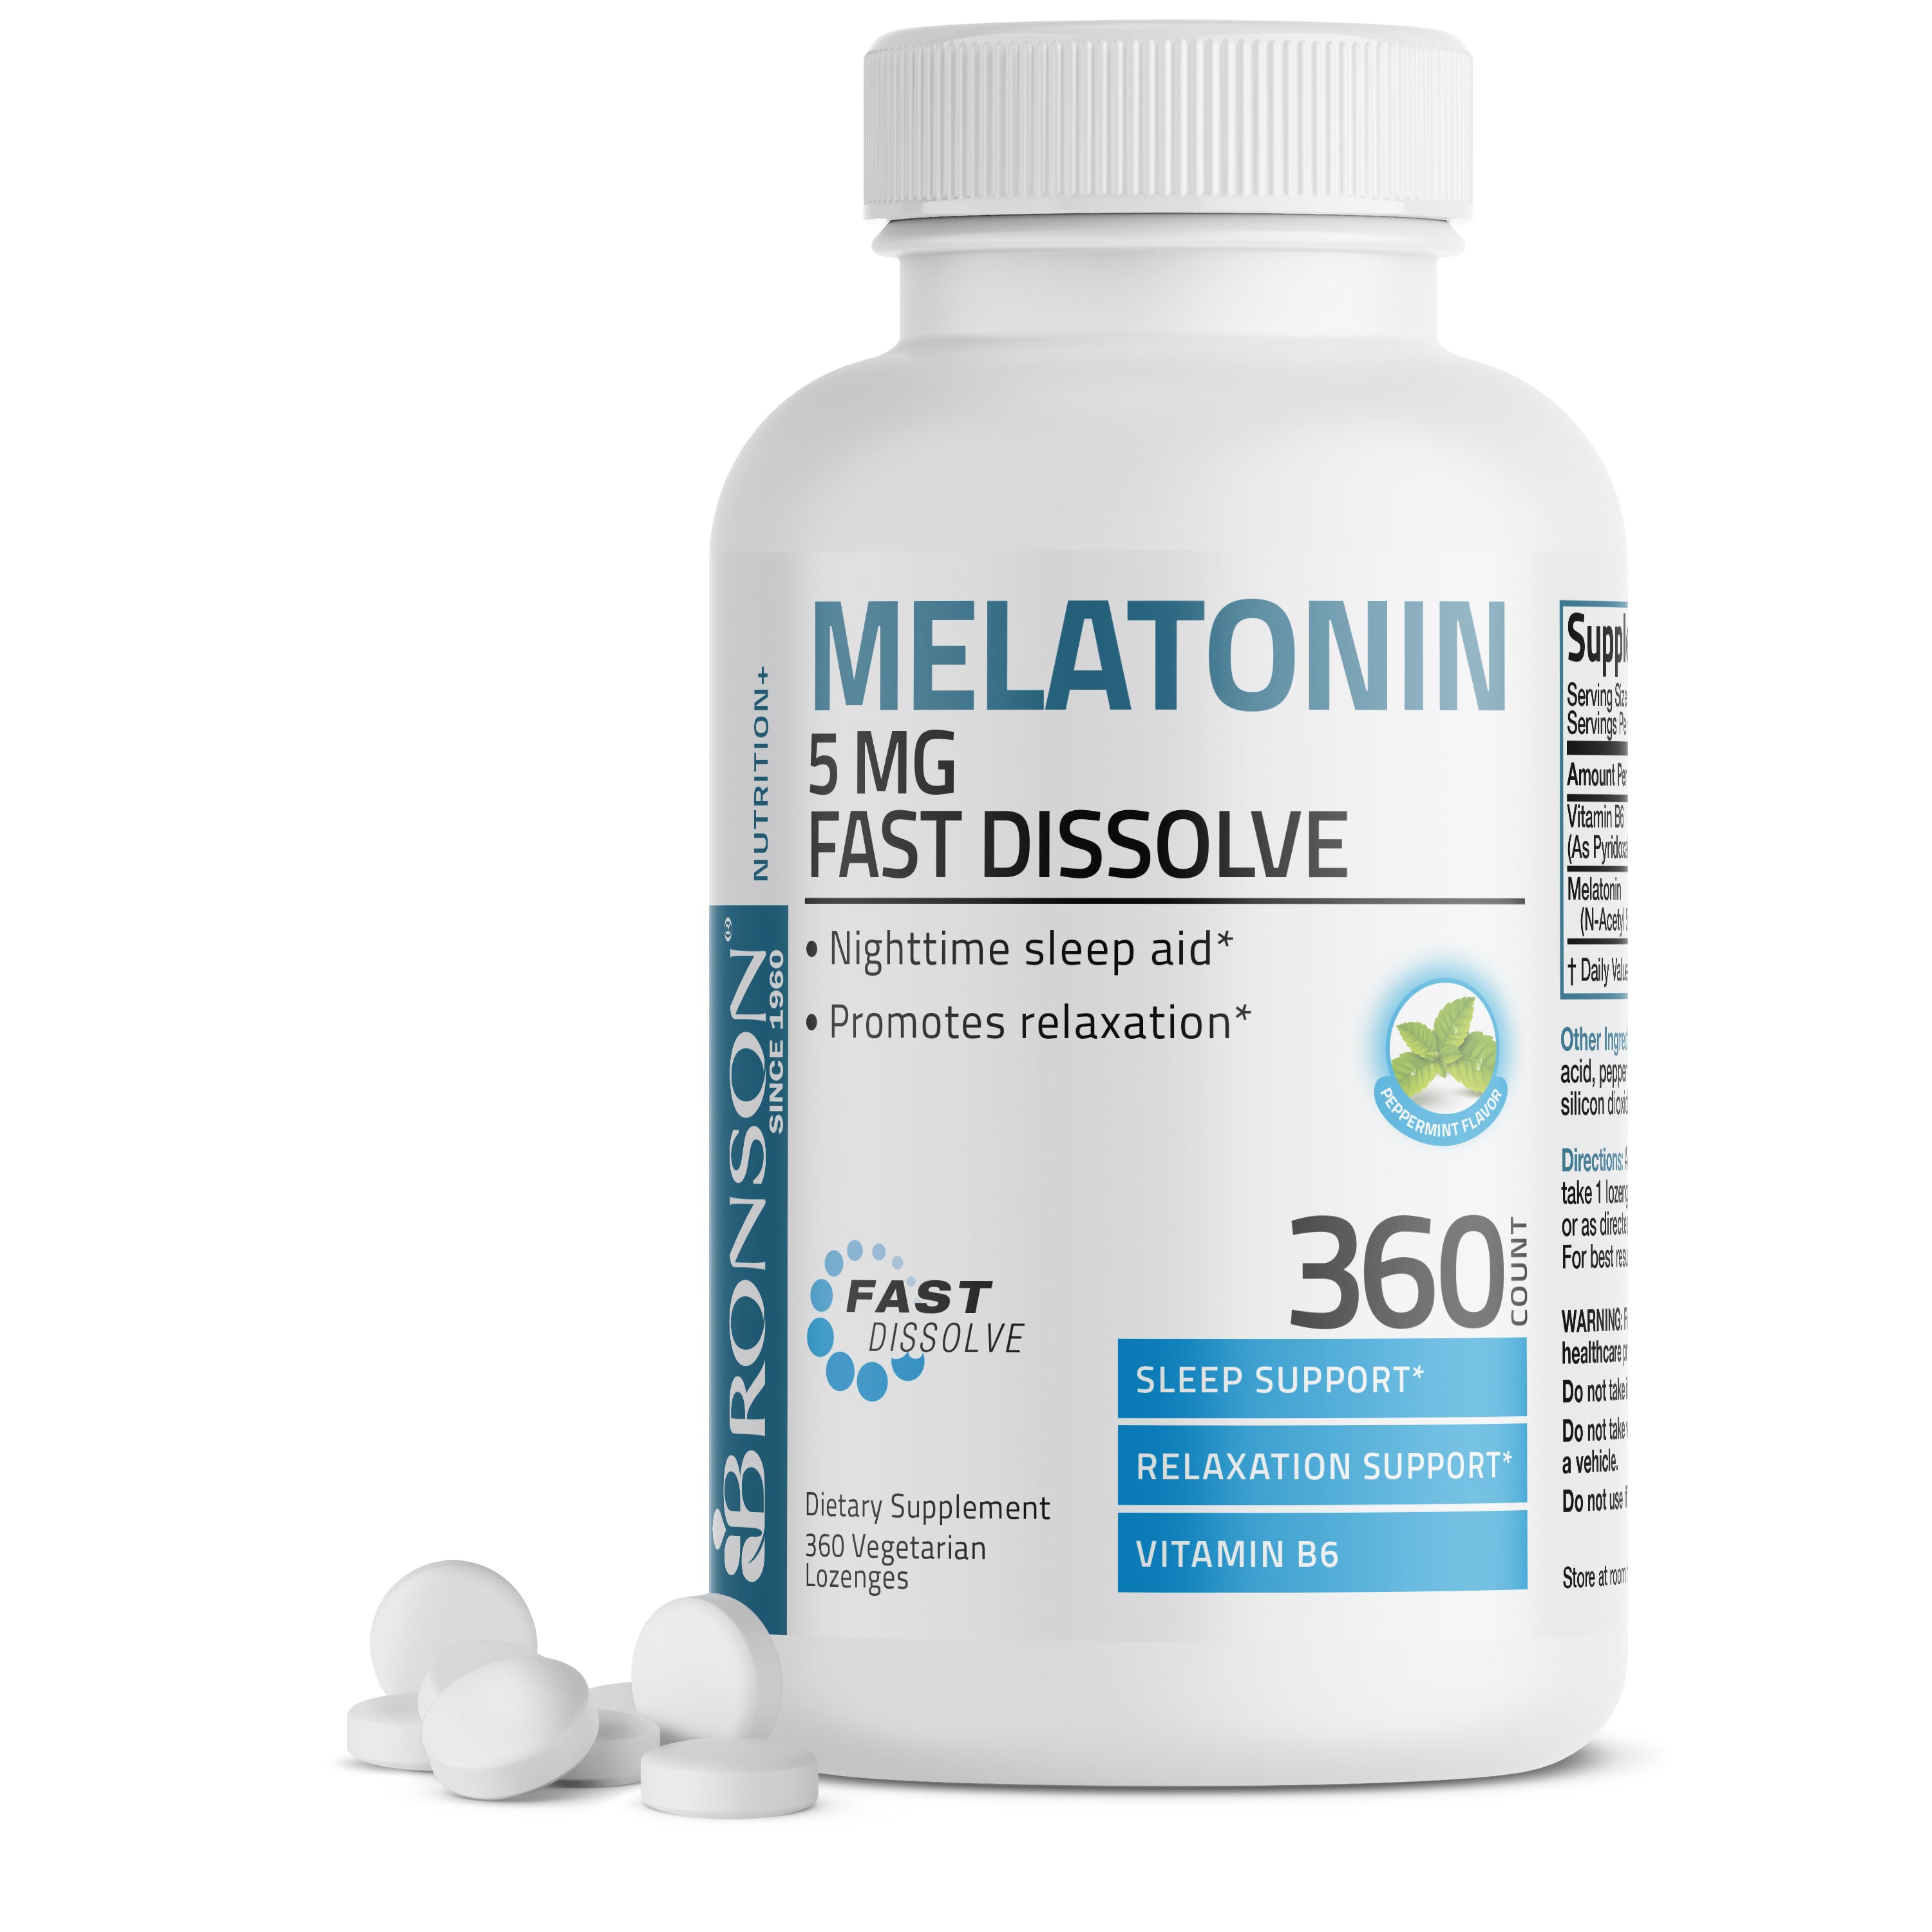 Melatonin Fast Dissolve - 5 mg - 360 Vegetarian Lozenges view 1 of 6